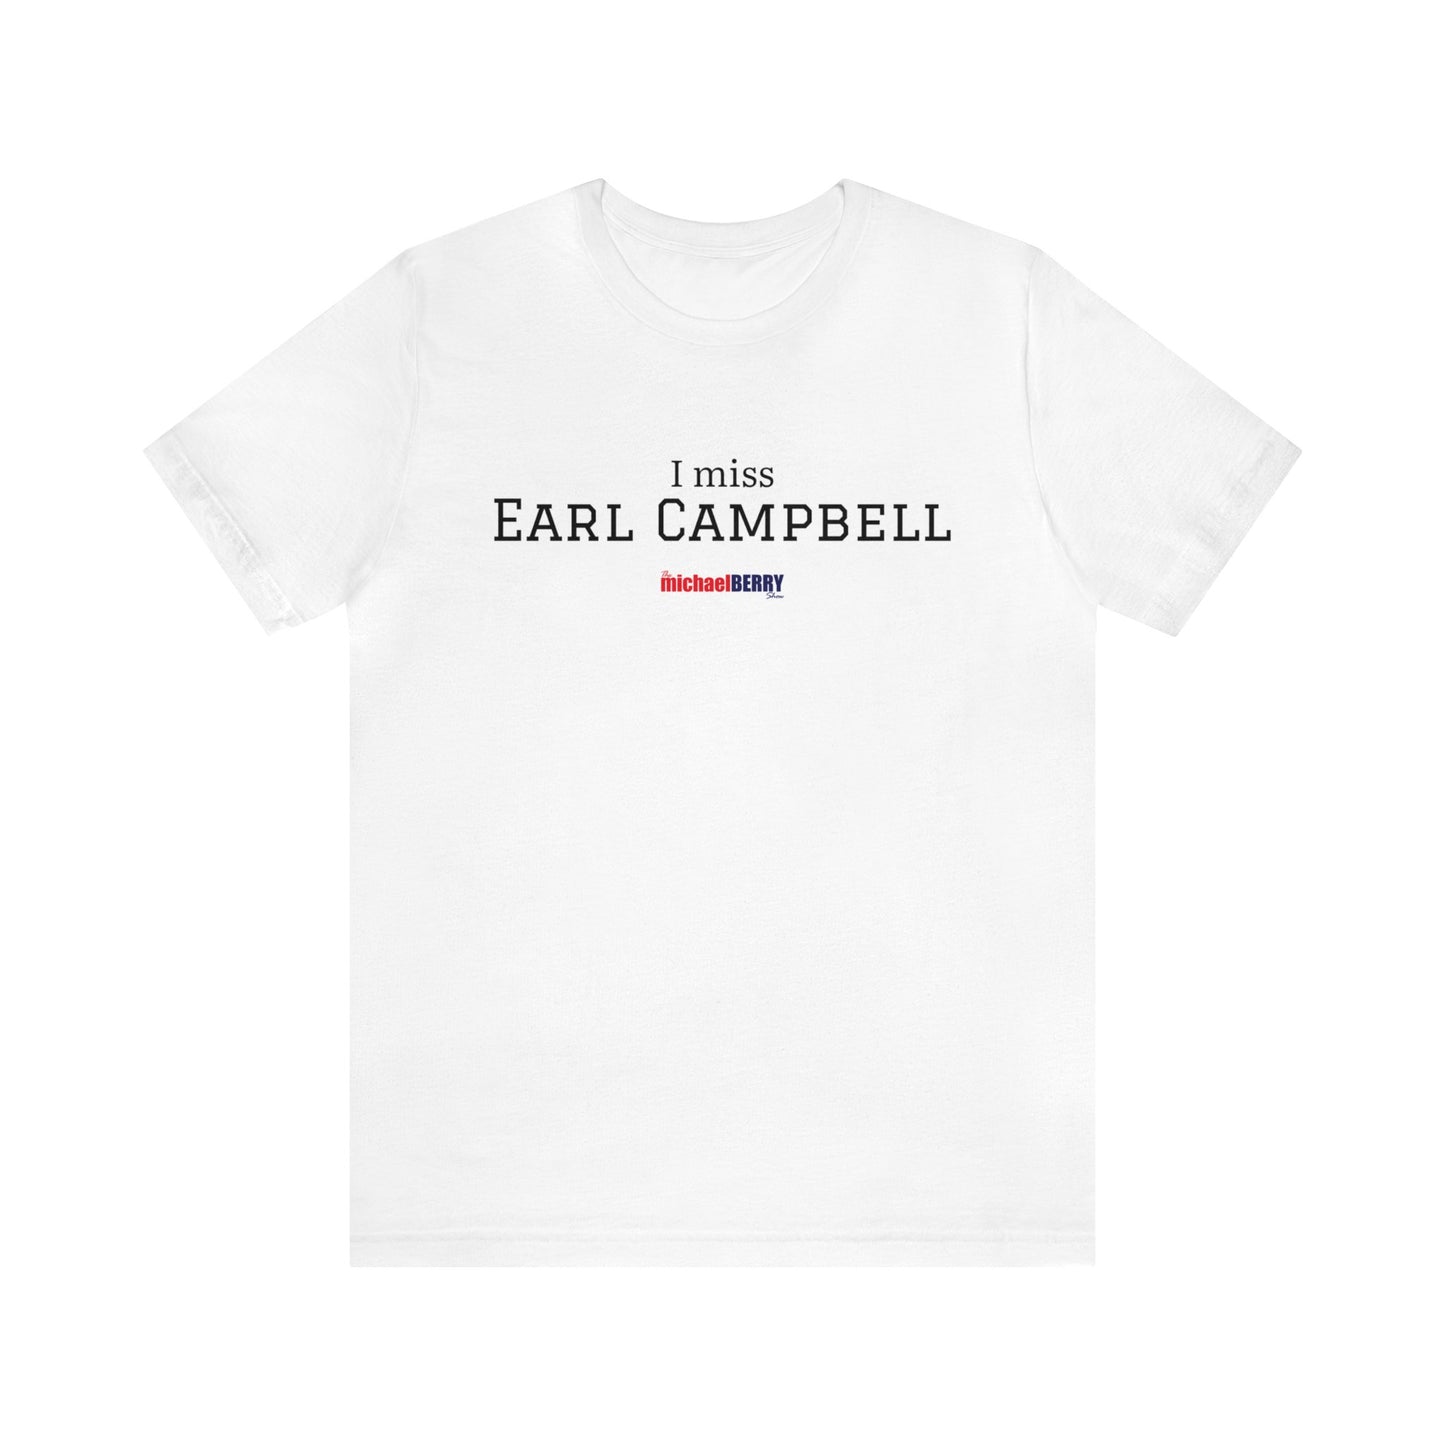 I miss EARL CAMPBELL - Unisex Jersey Short Sleeve Tee